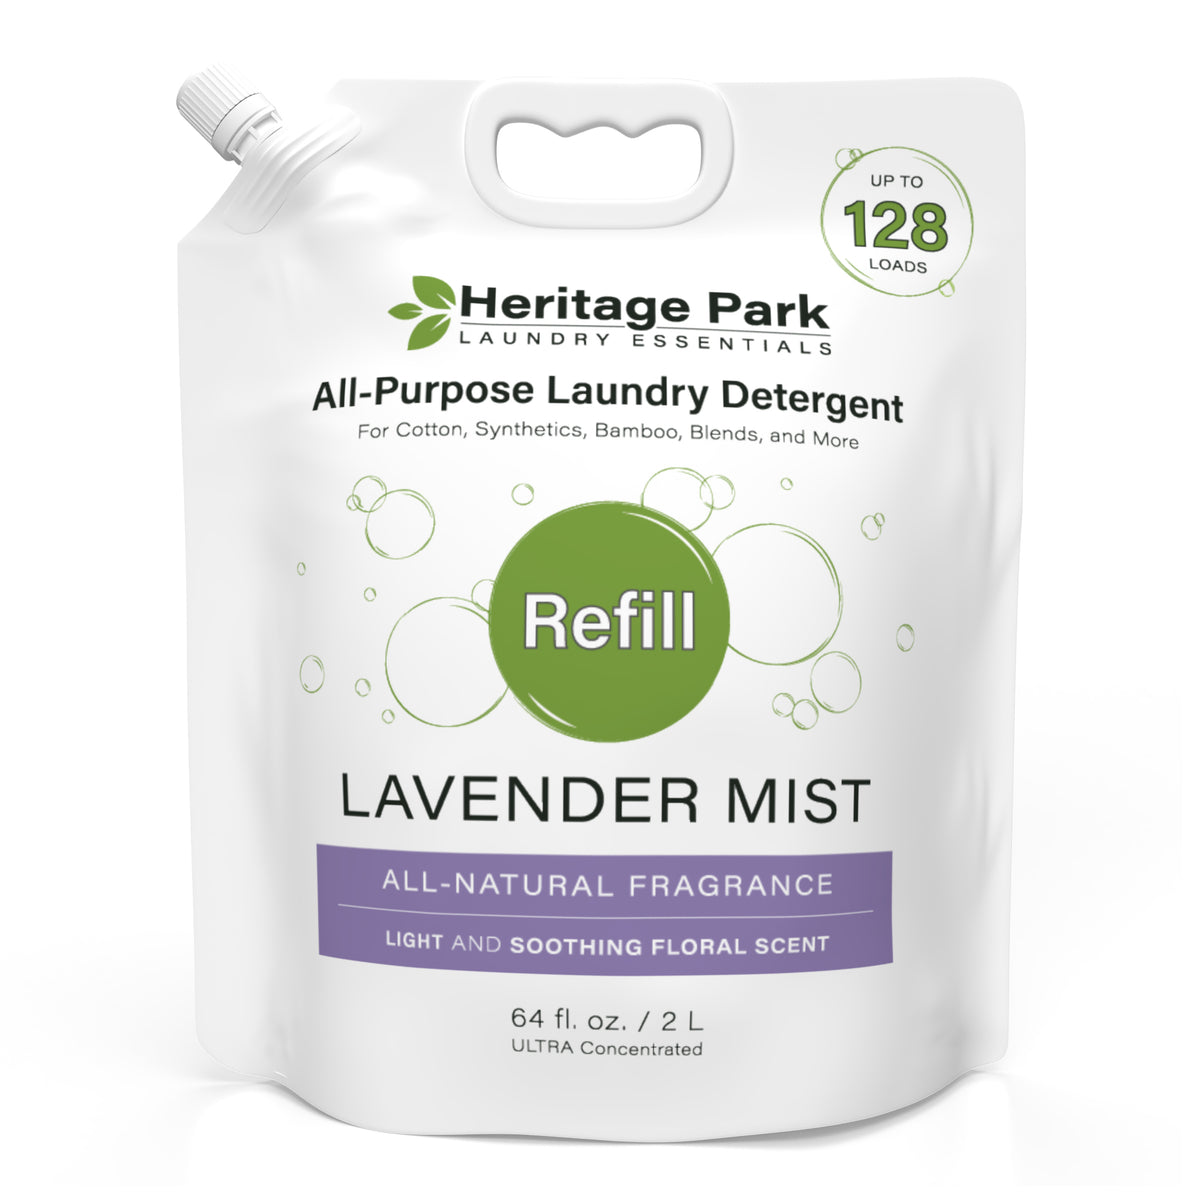 Heritage Park All-Purpose Laundry Detergent - Lavender Mist